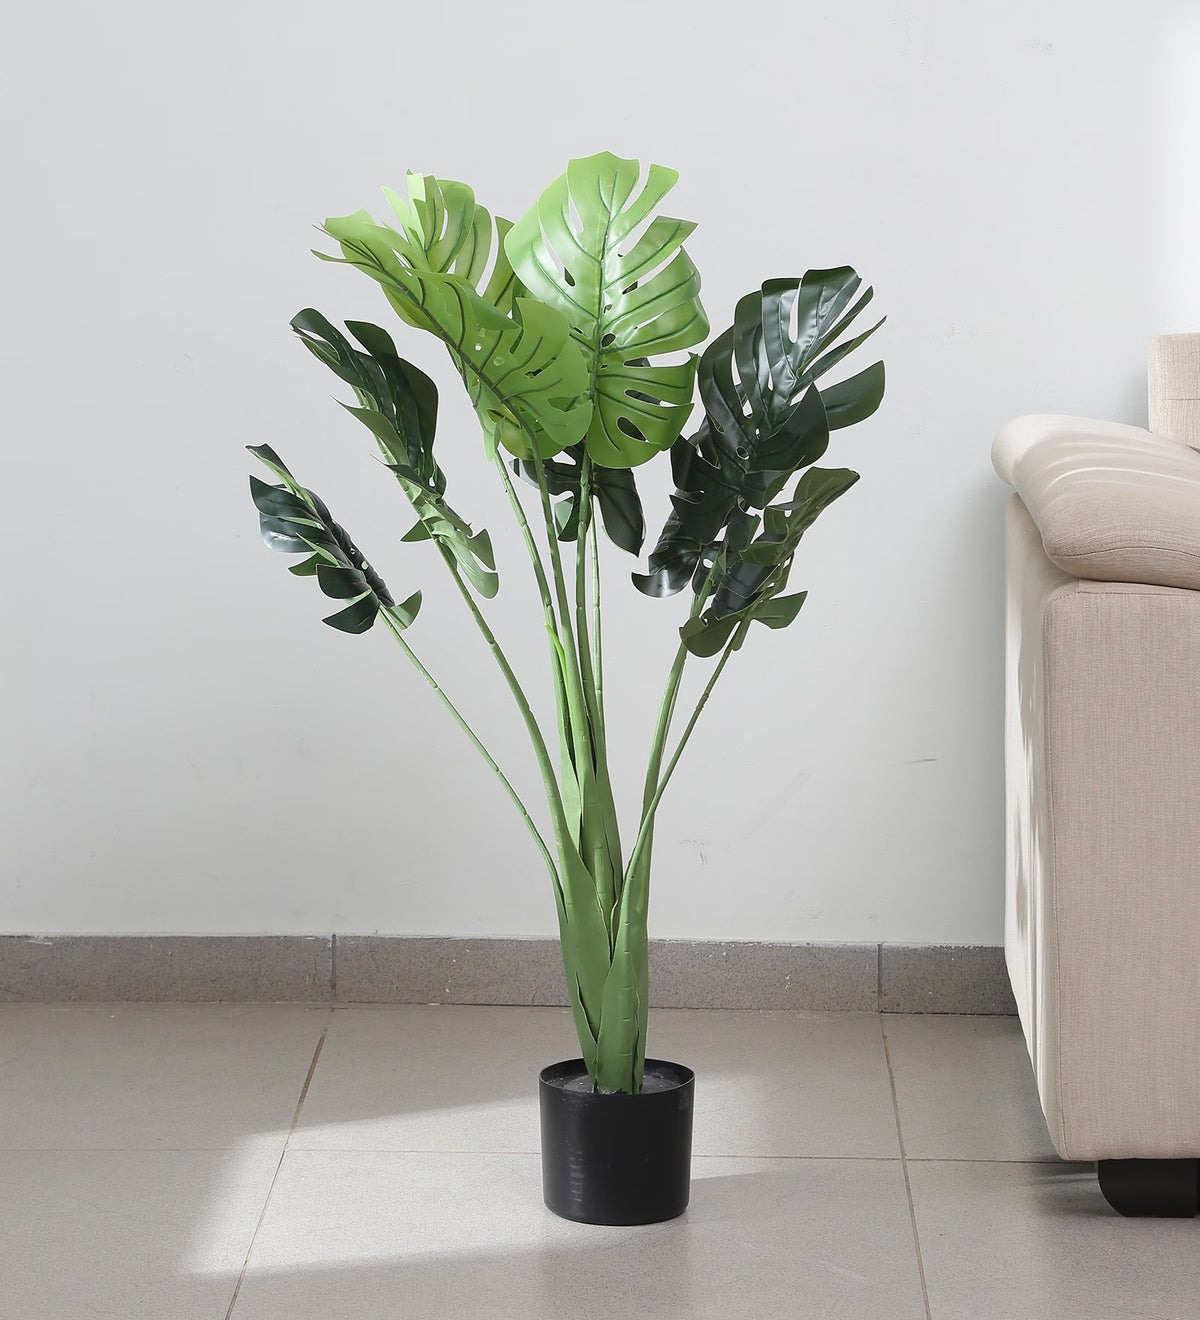 Beautiful Artificial Monstera Plant Basic Black Pot for Interior Decor/Home Decor/Office Decor (90 cm Tall, Green)